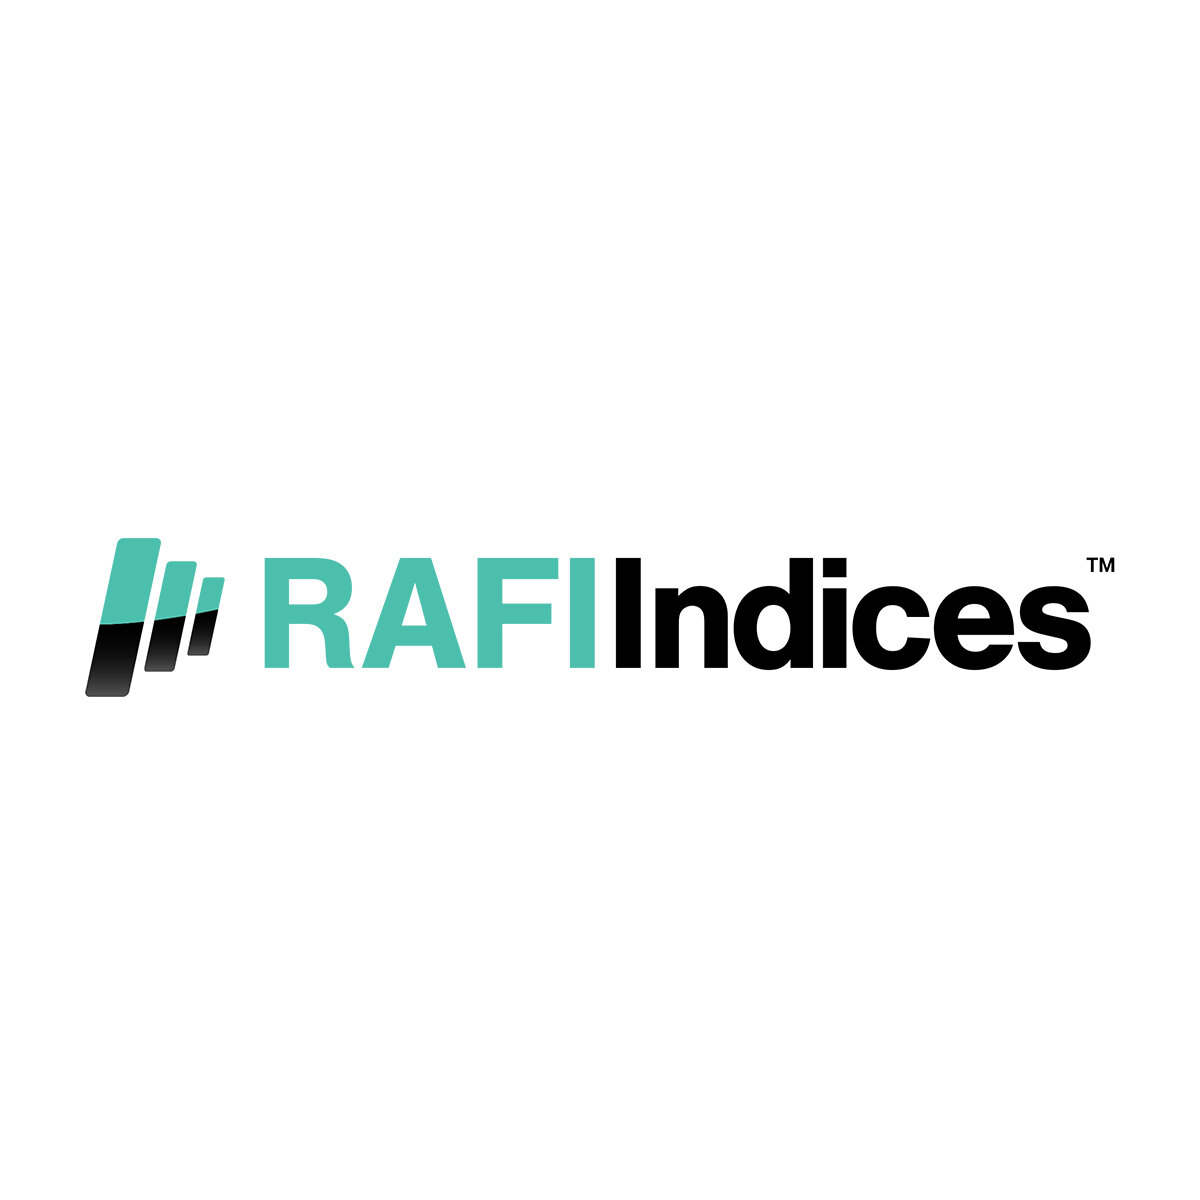 Rafi_logo2.jpg